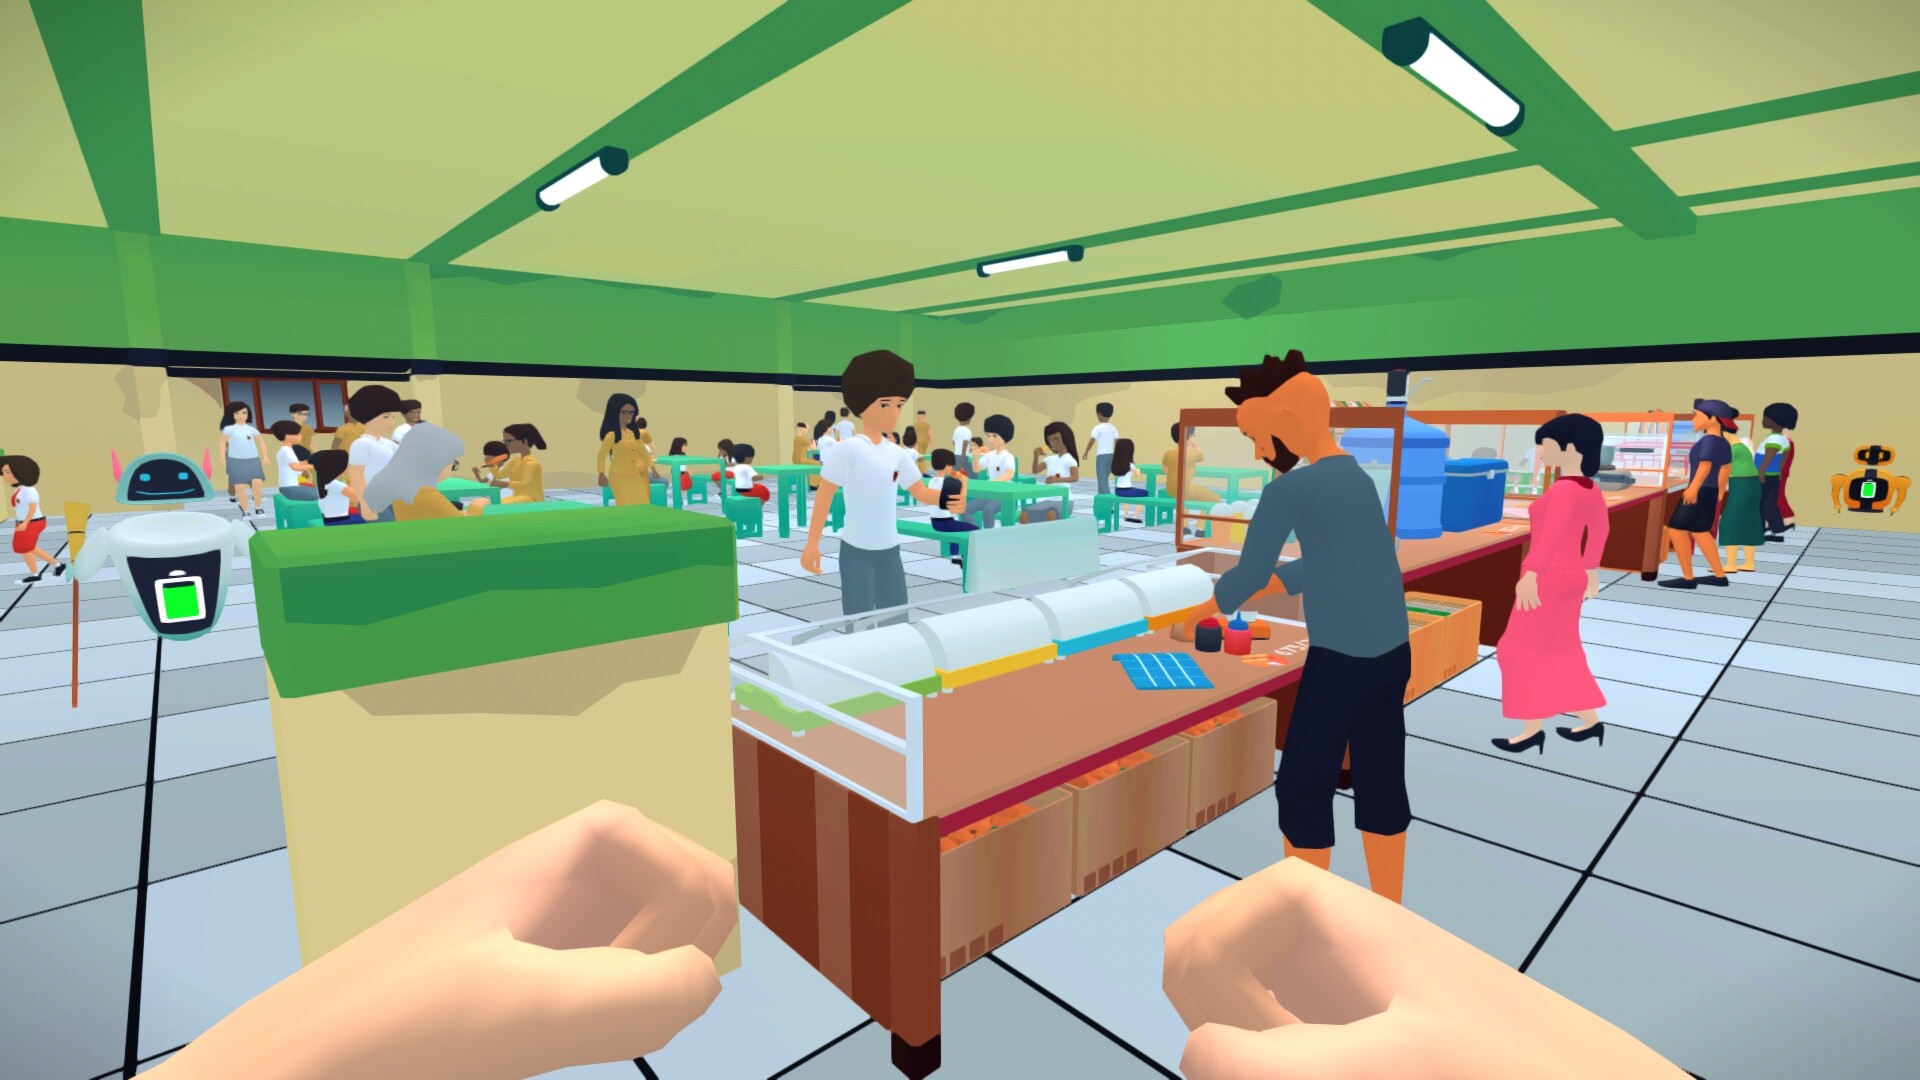 School Cafeteria Simulator Steam CD Key 2.81 $